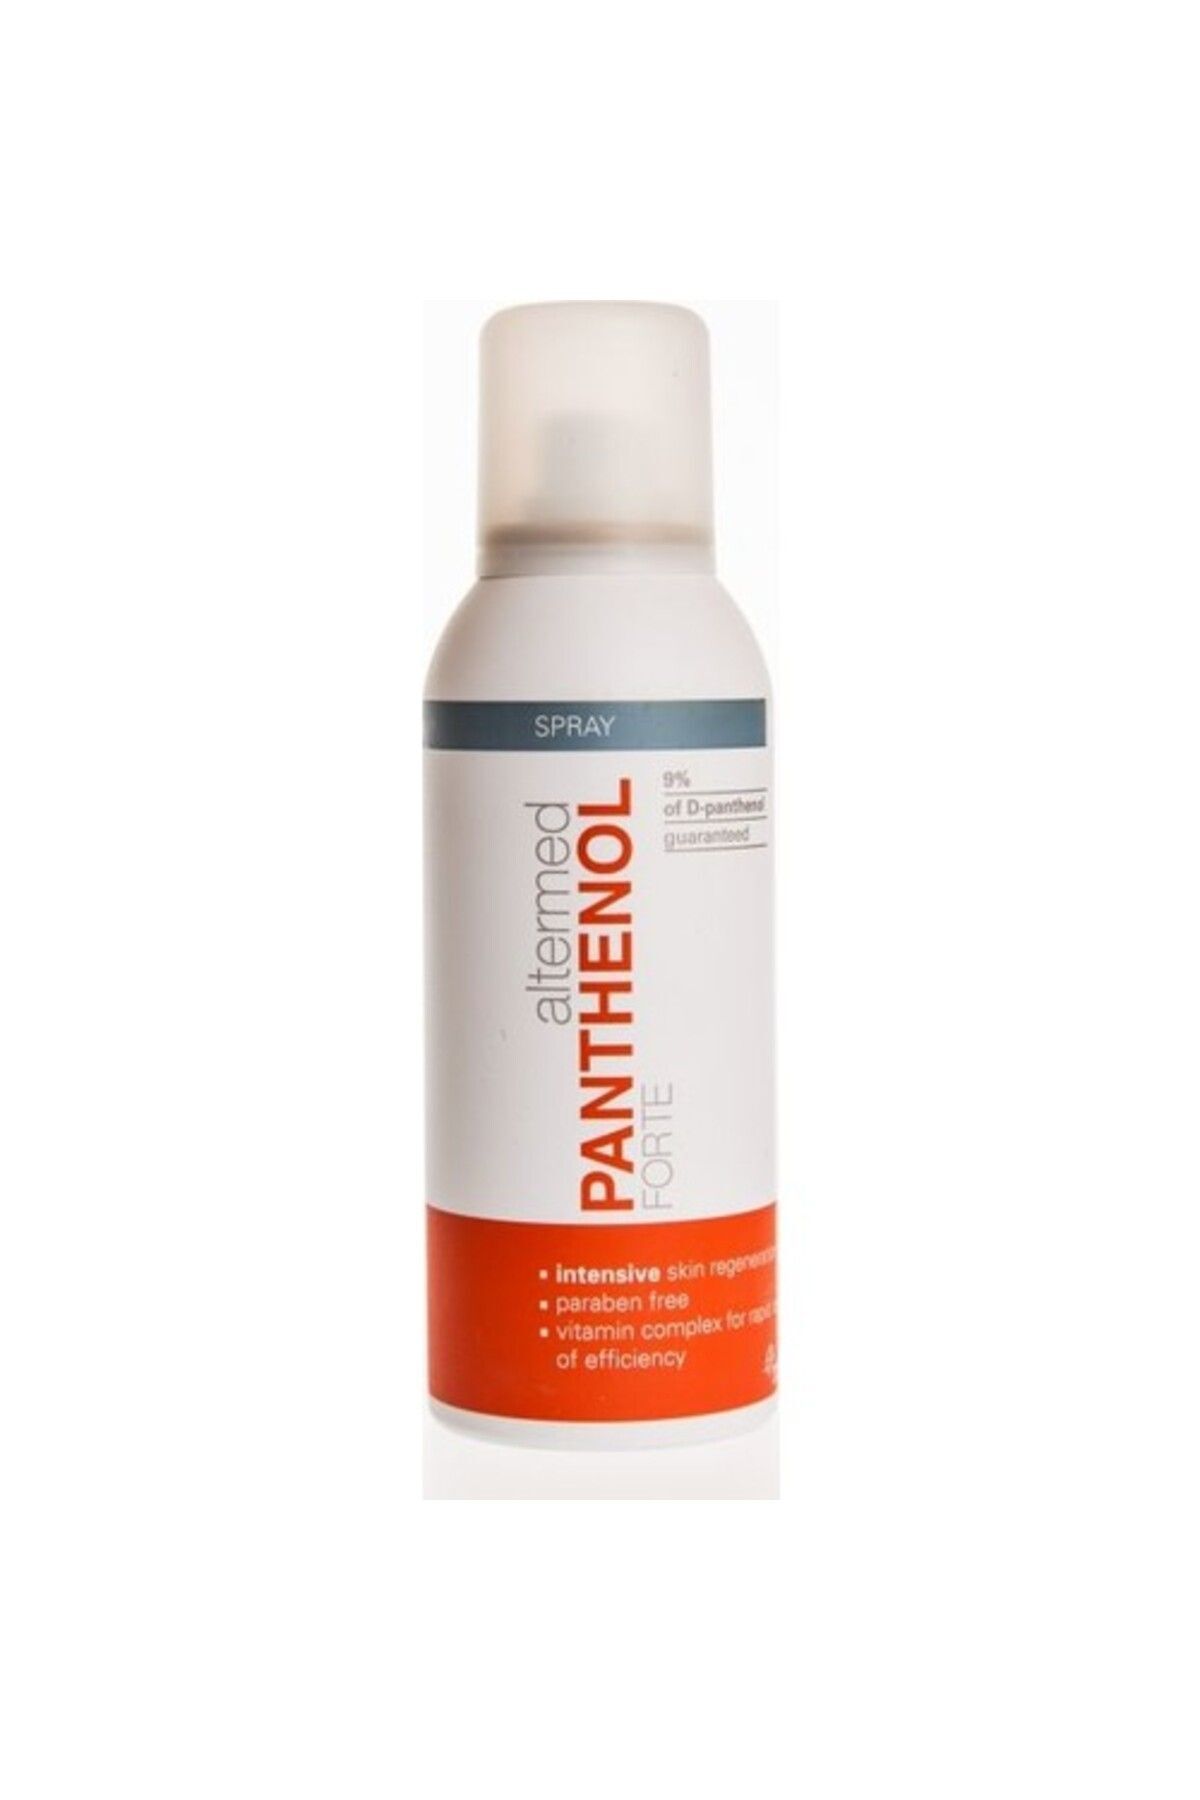 Altermed Panthenol Forte Spray 9% 150ml